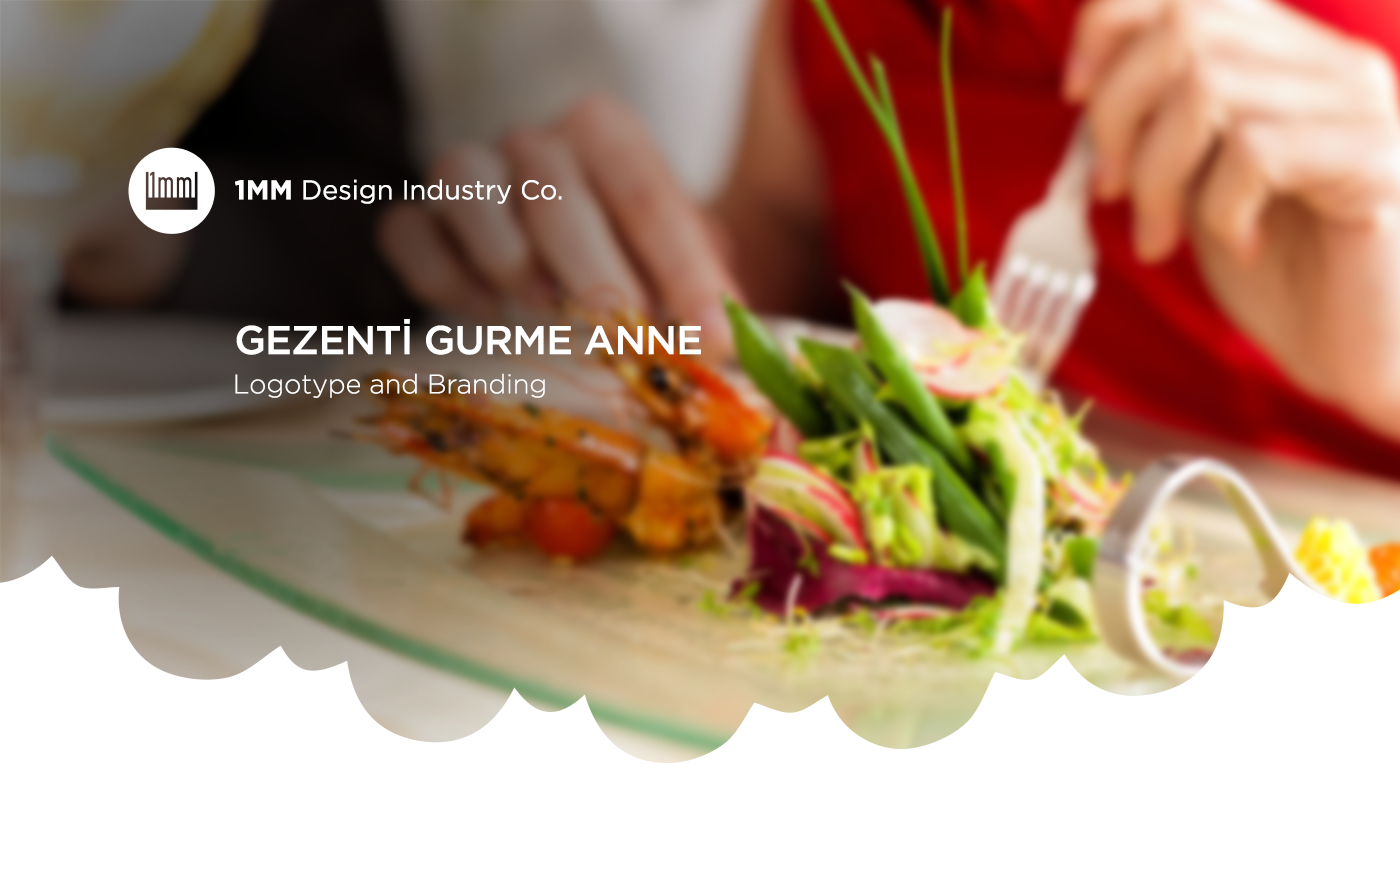 Gezenti Gurme Anne foodie Blog logo business card